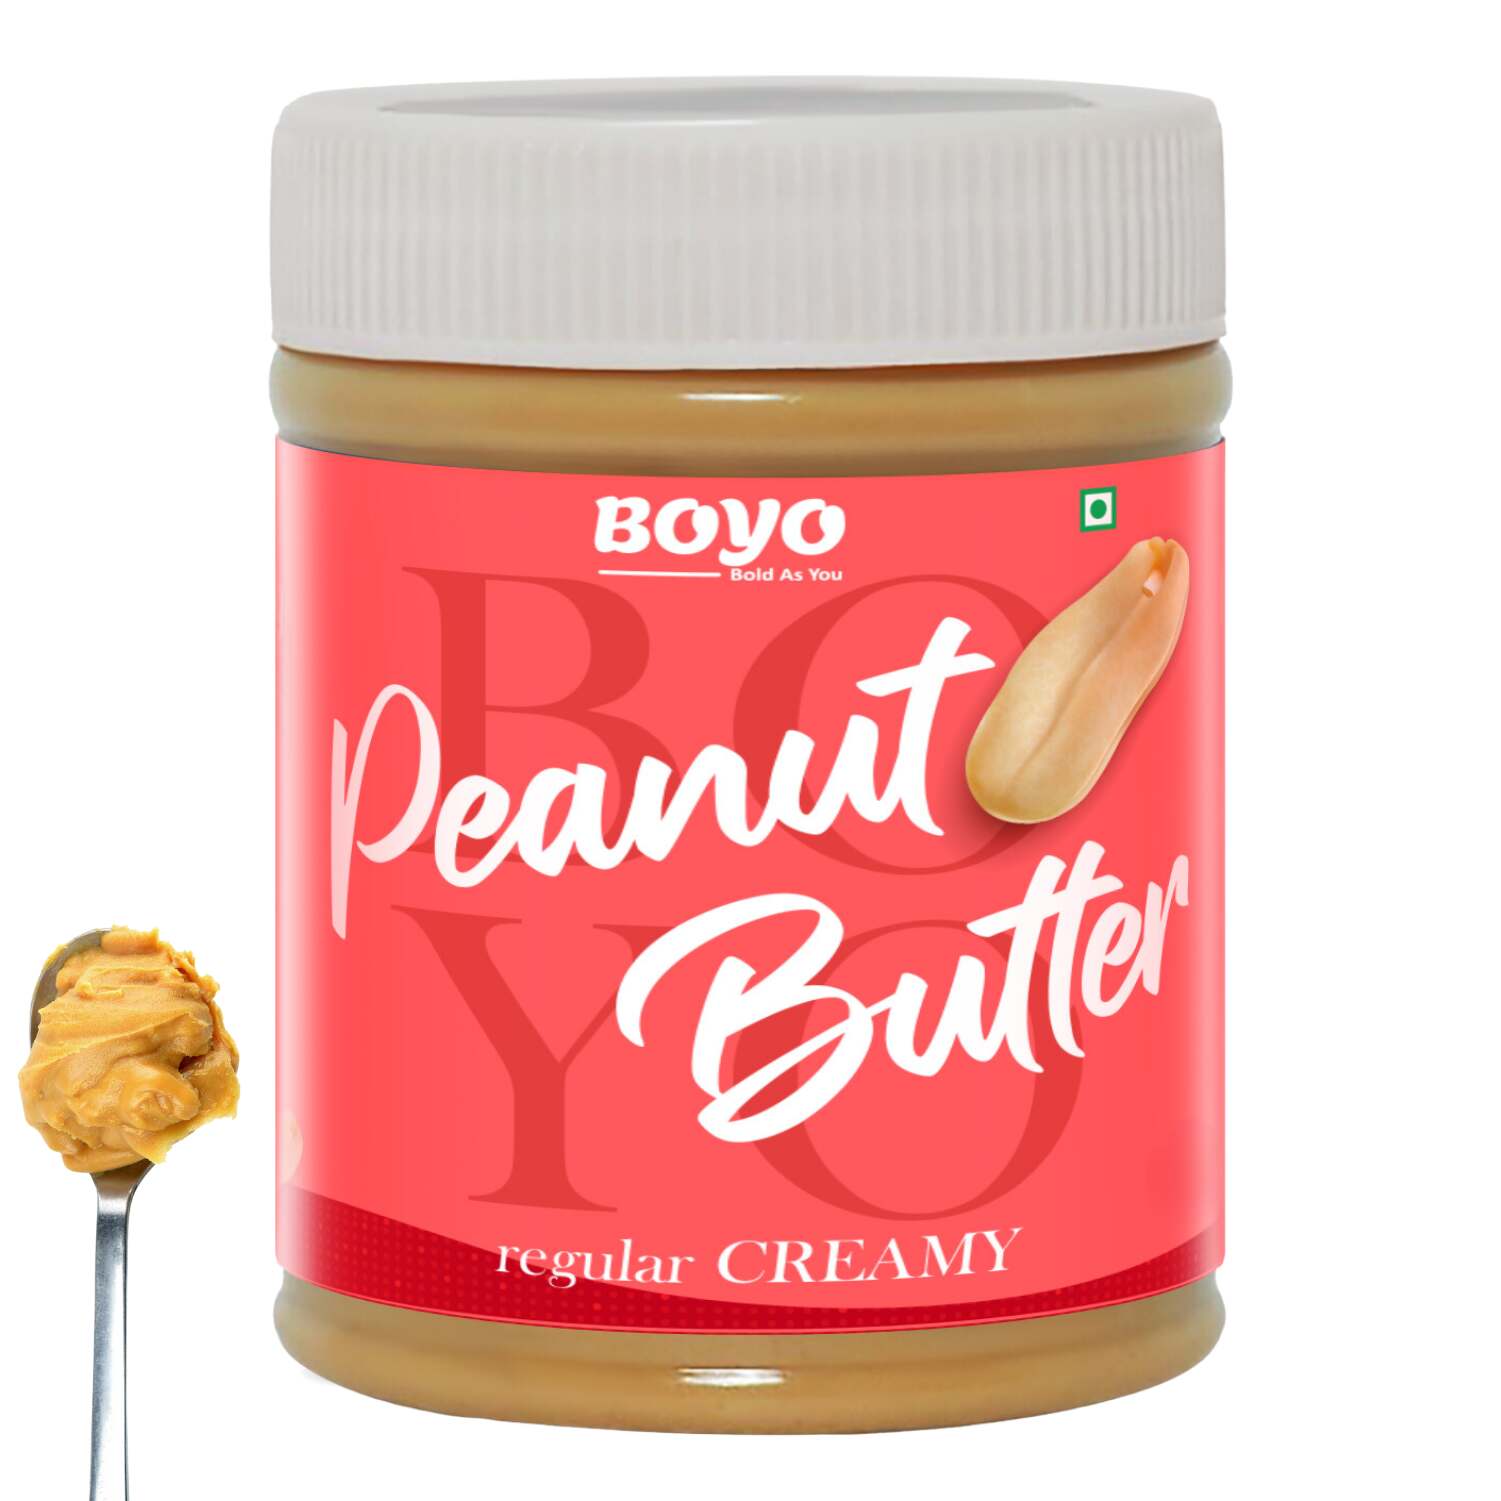 Peanut Butter Regular Creamy - 1kg